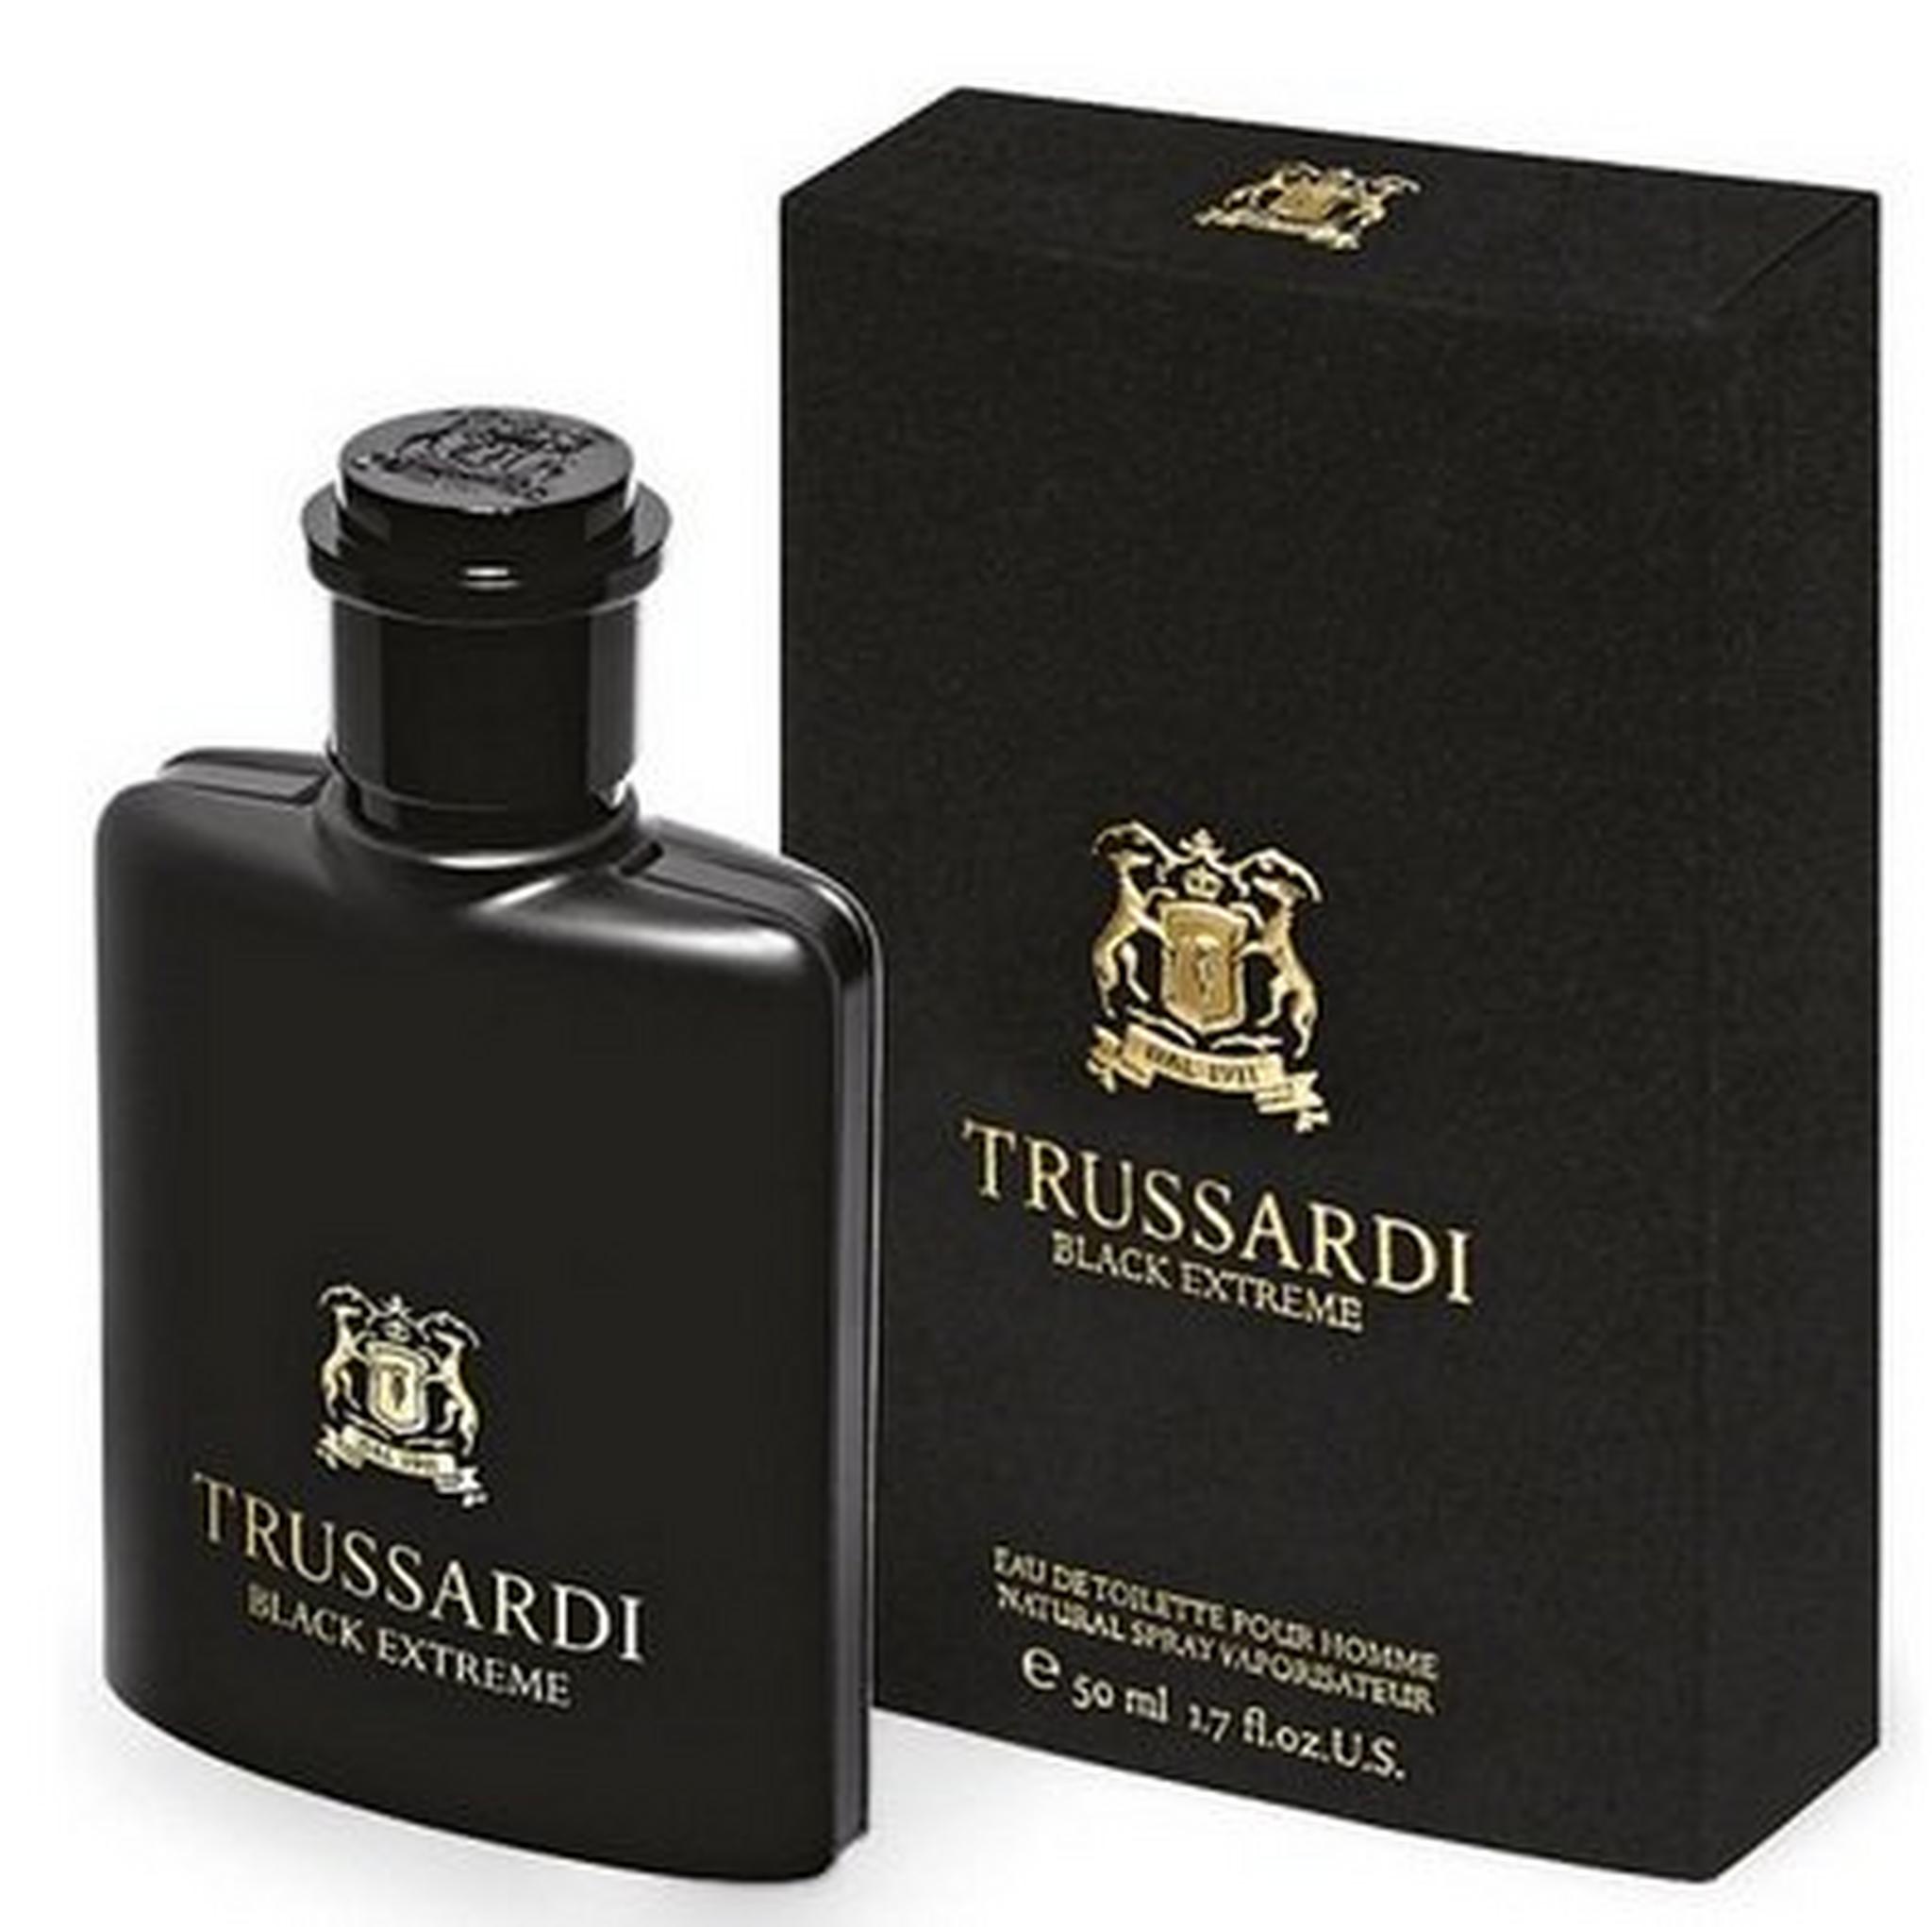 Trussardi Black Extreme Perfume for Men 100ml